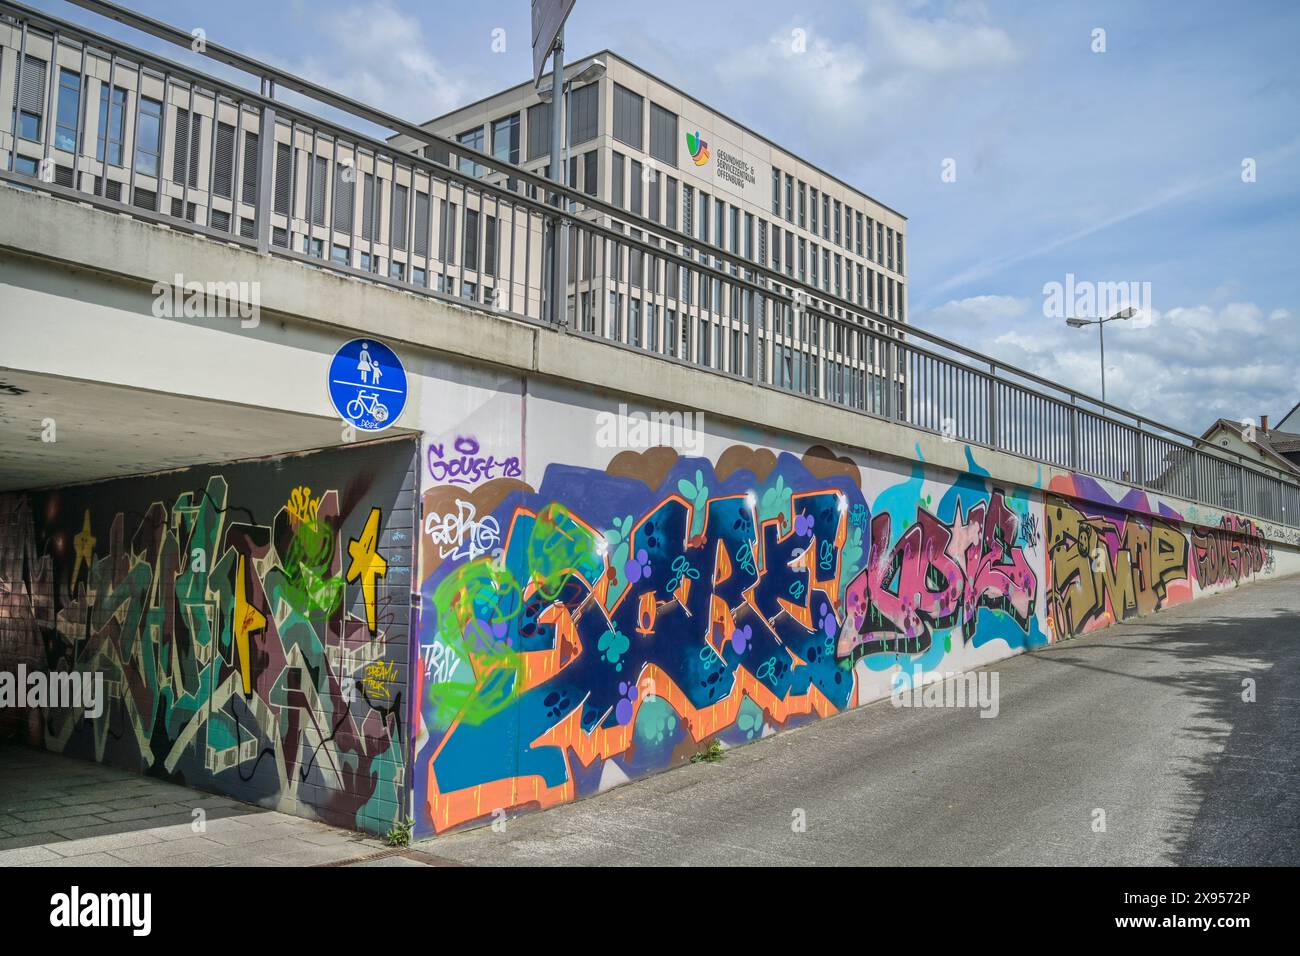 Graffiti, underpass, main street, medical center, health center, service center, Kronenstraße, Offenburg, Baden-Württemberg, Germany, Graffitis, Unter Stock Photo